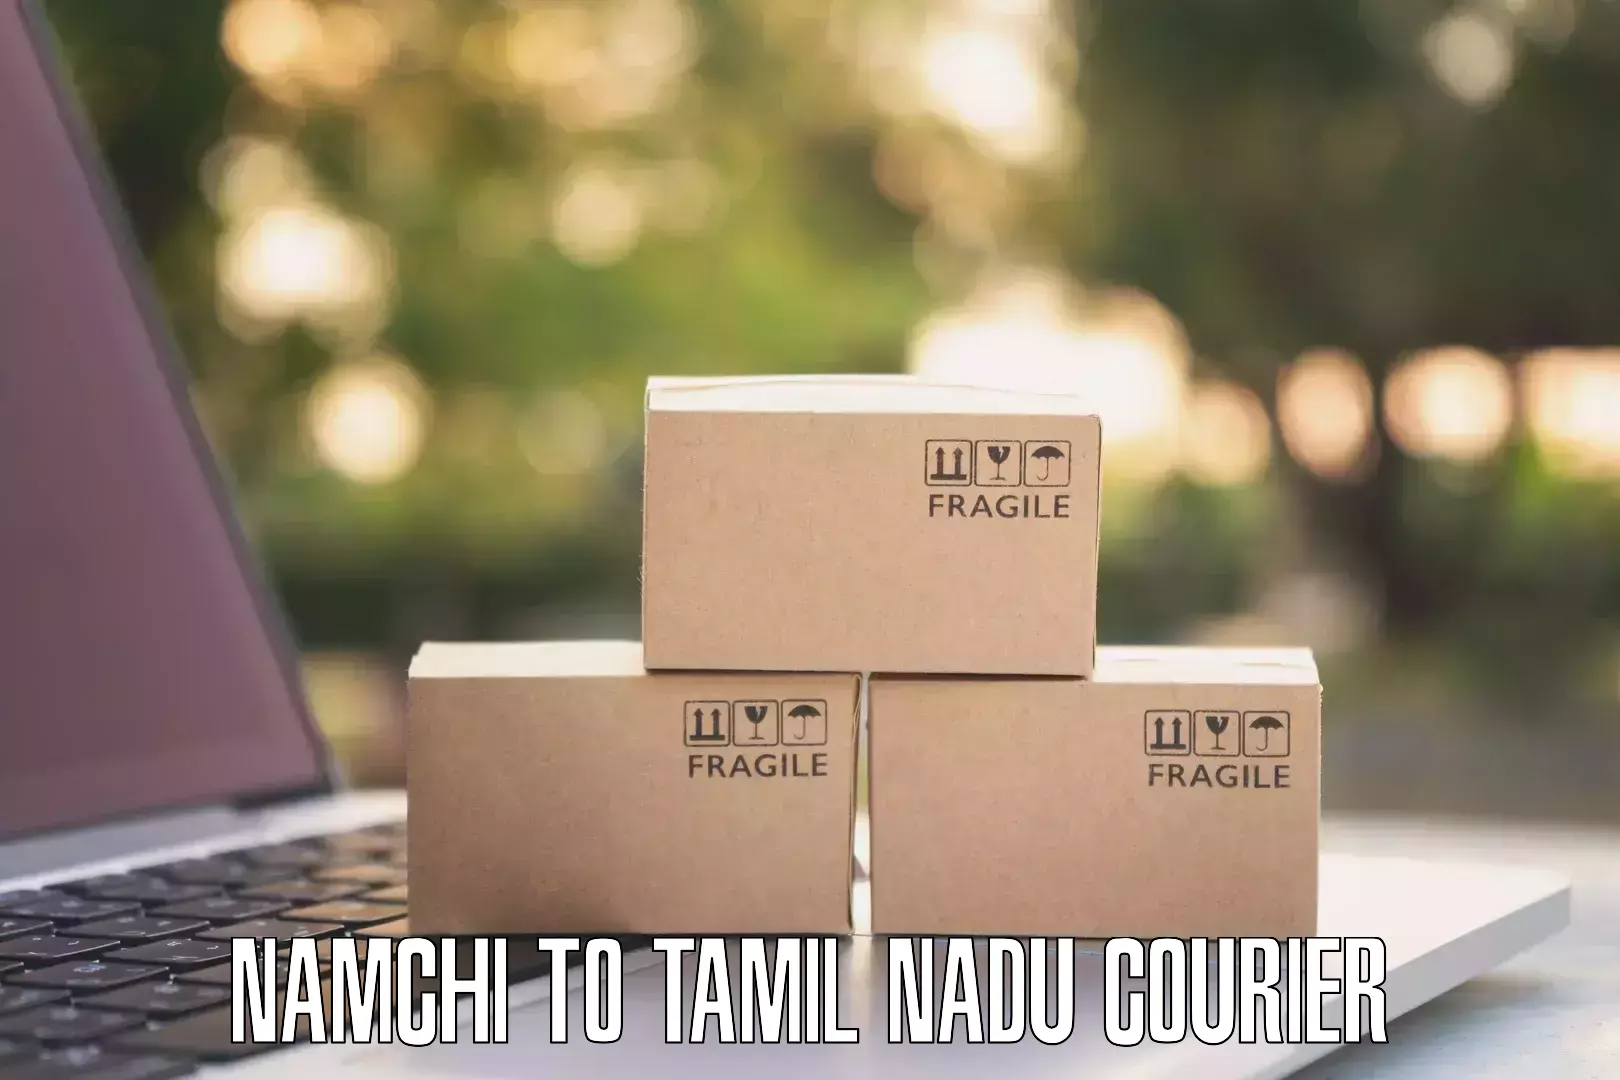 Multi-modal transportation Namchi to Tamil Nadu